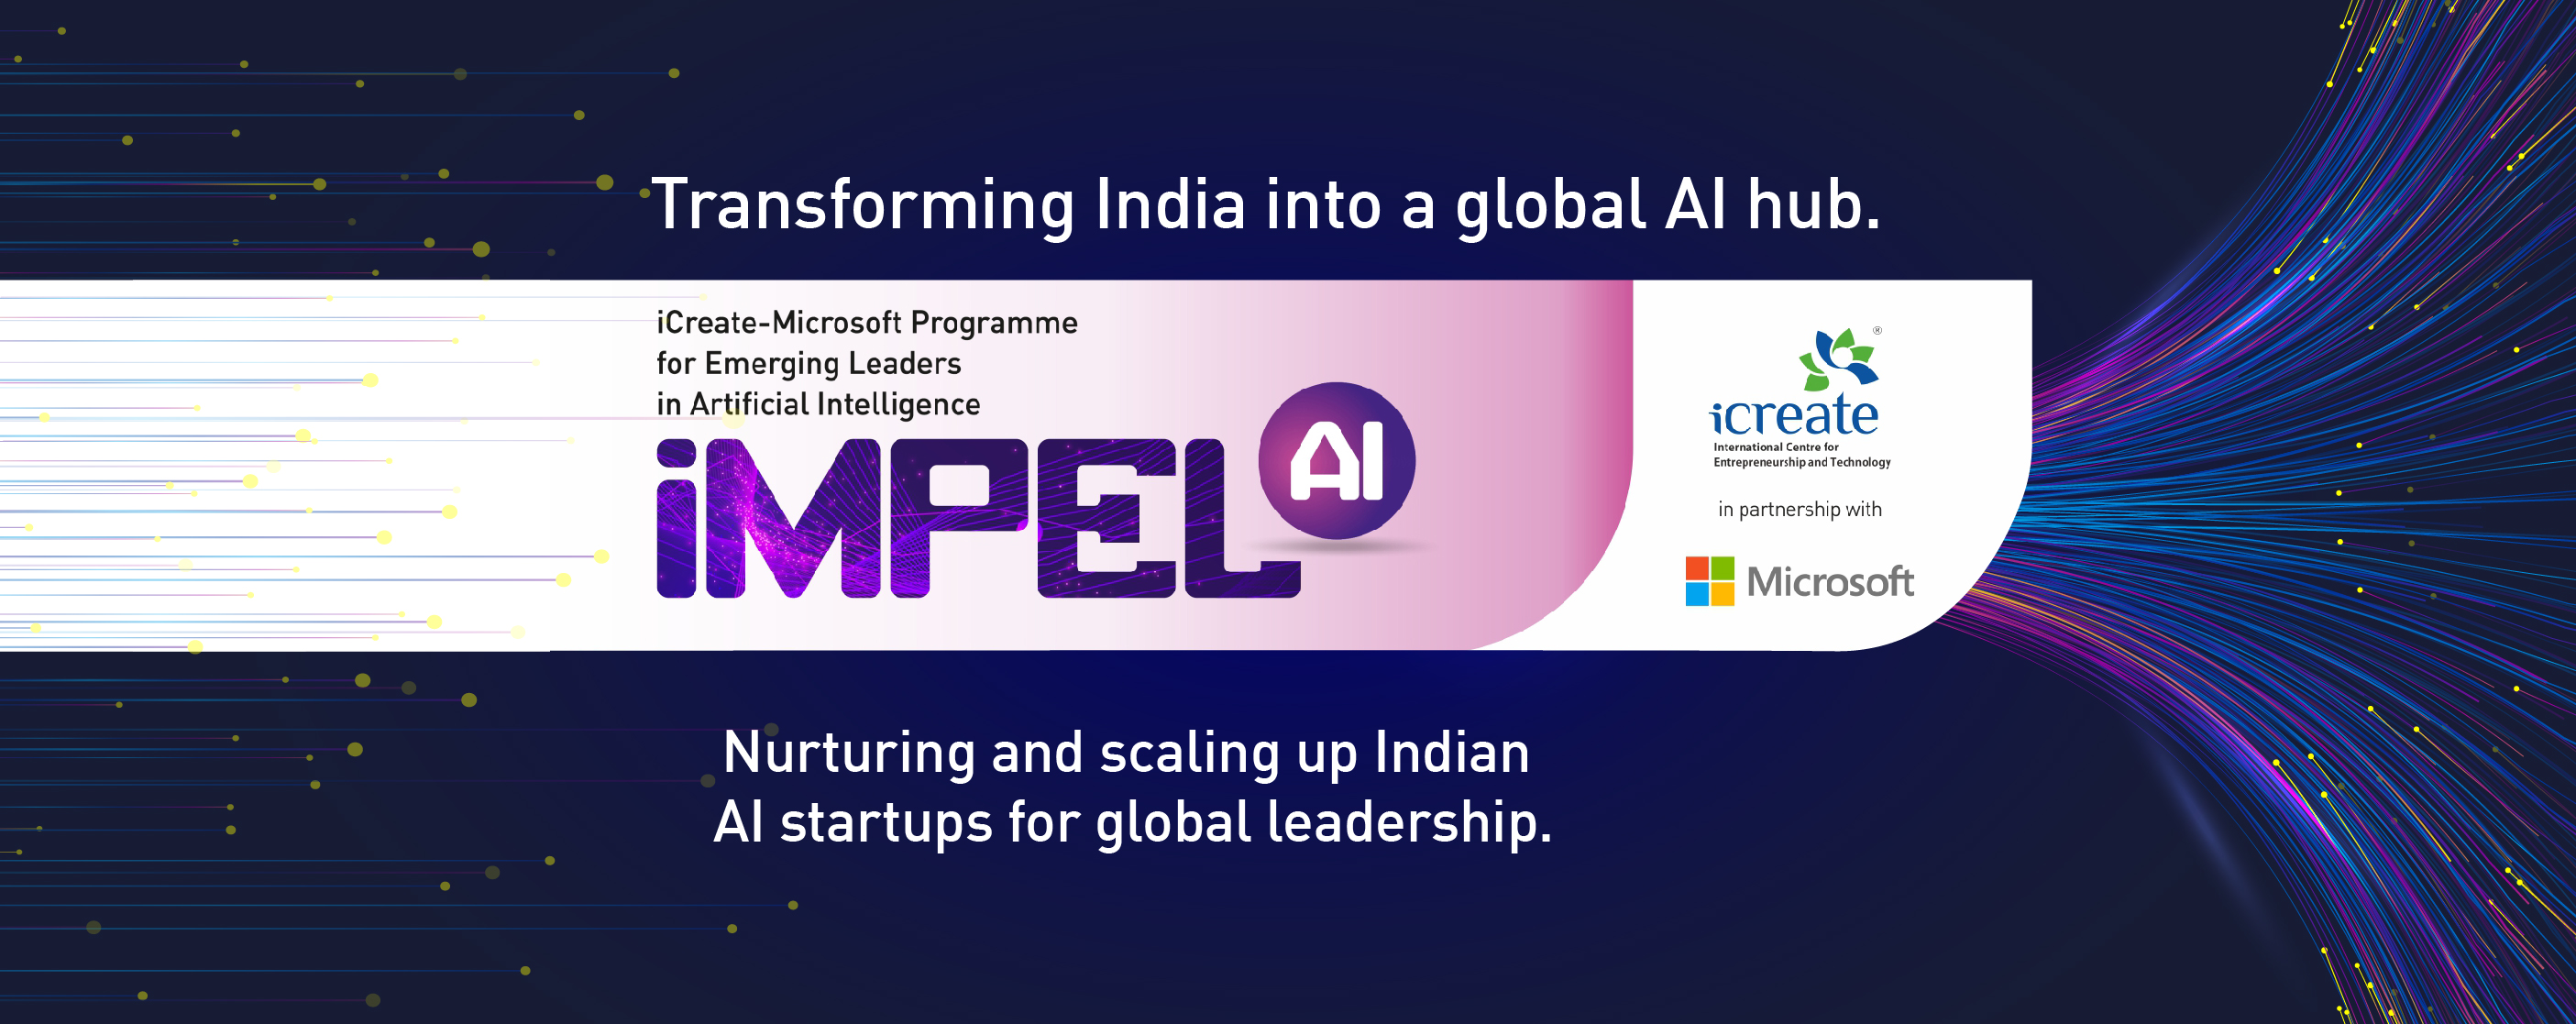 iMPEL-AI iCreate Website Banner